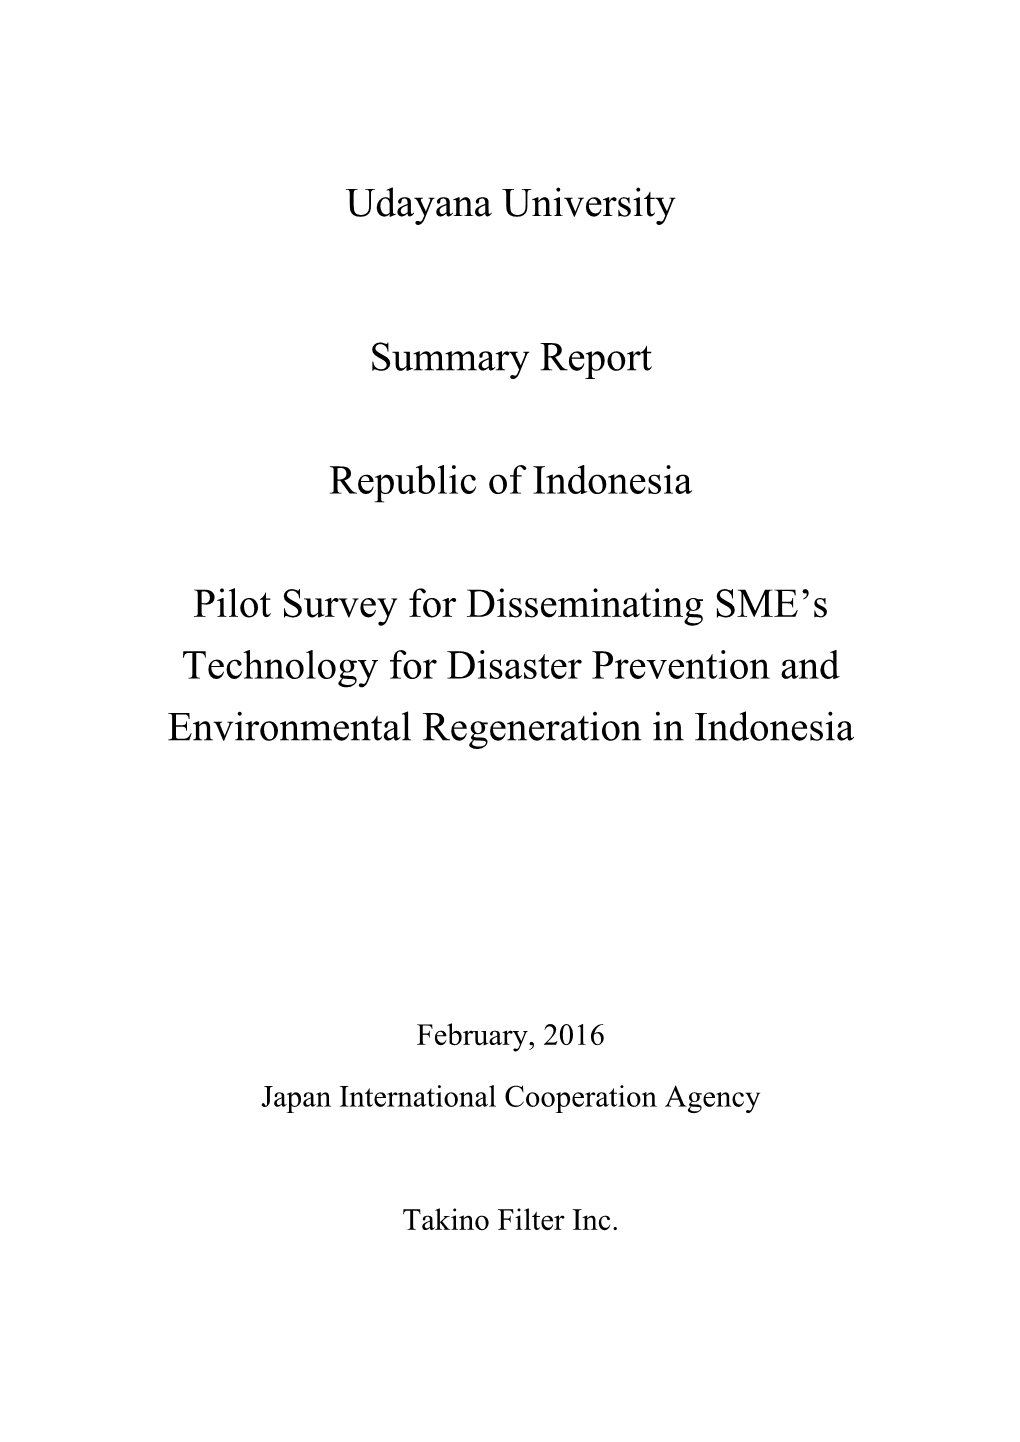 Udayana University Summary Report Republic of Indonesia Pilot Survey